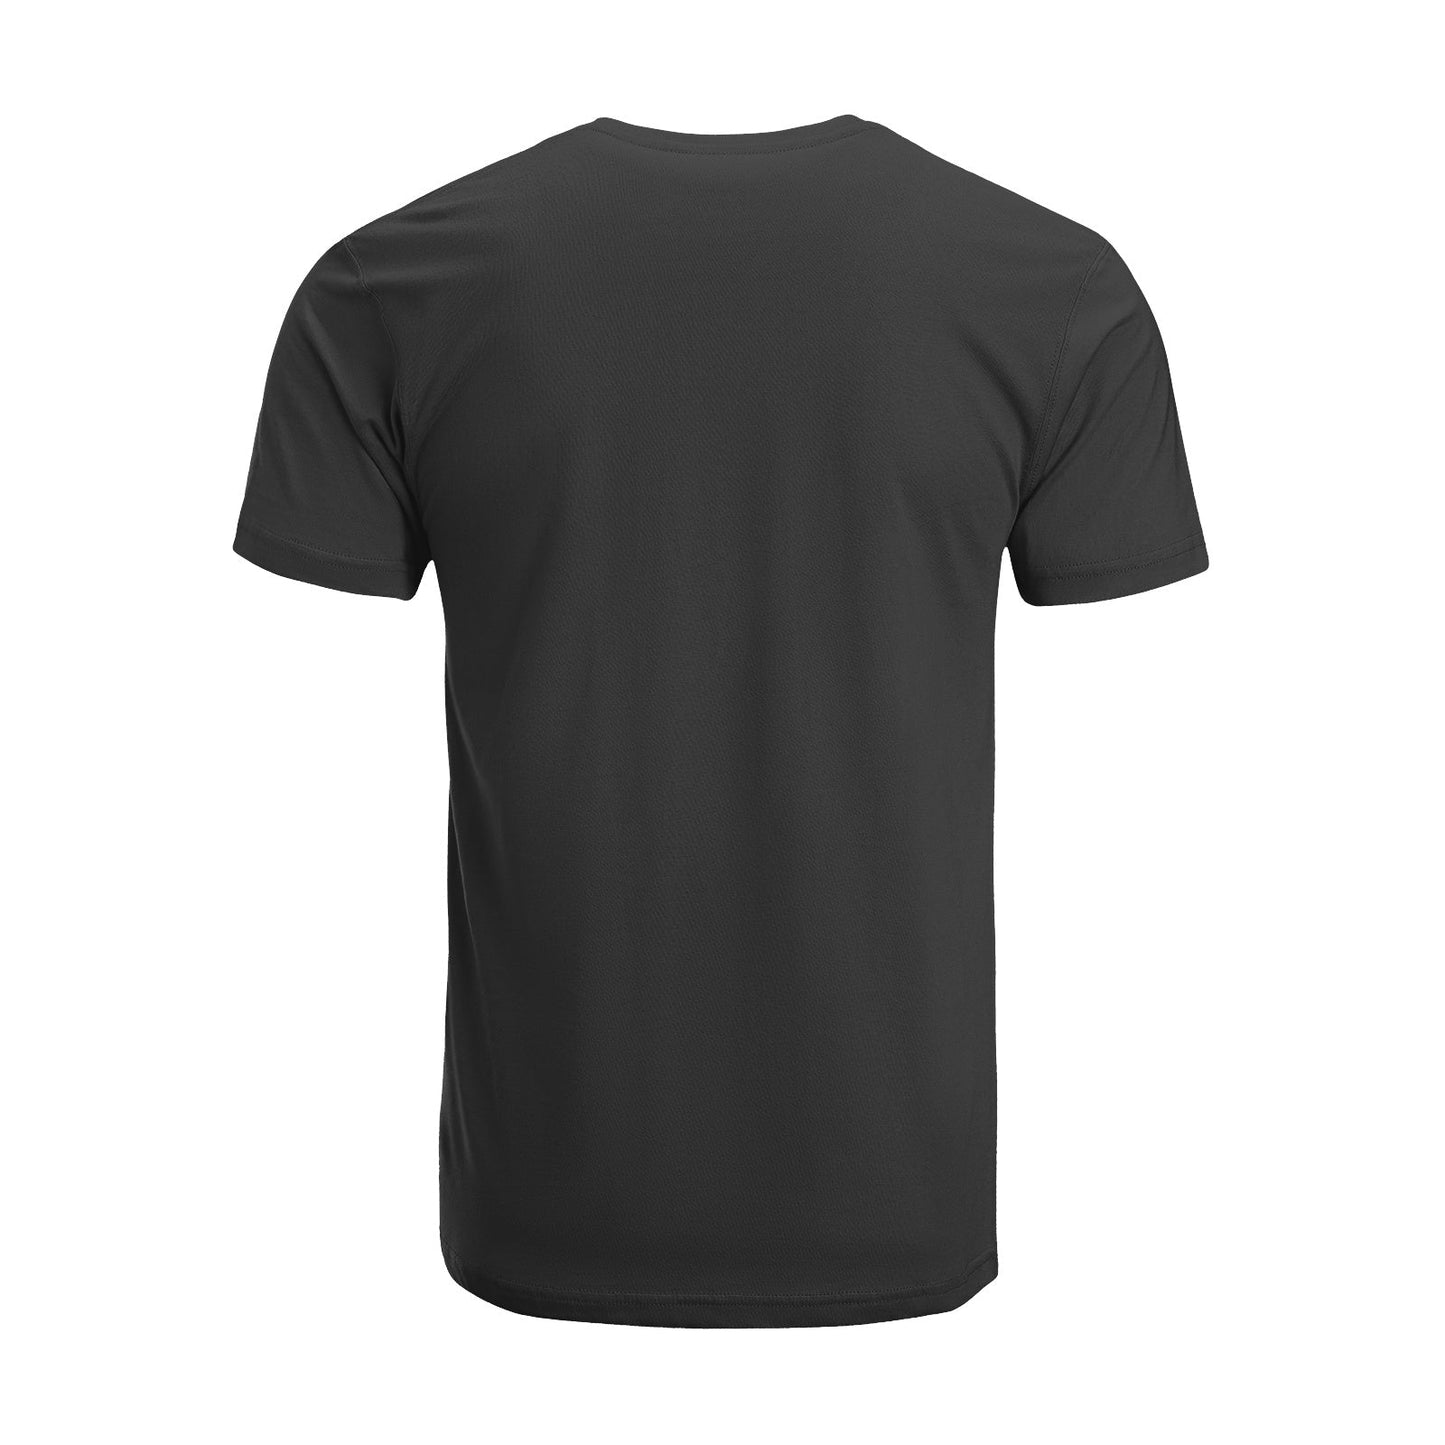 Unisex Short Sleeve Crew Neck Cotton Jersey T-Shirt USA 24